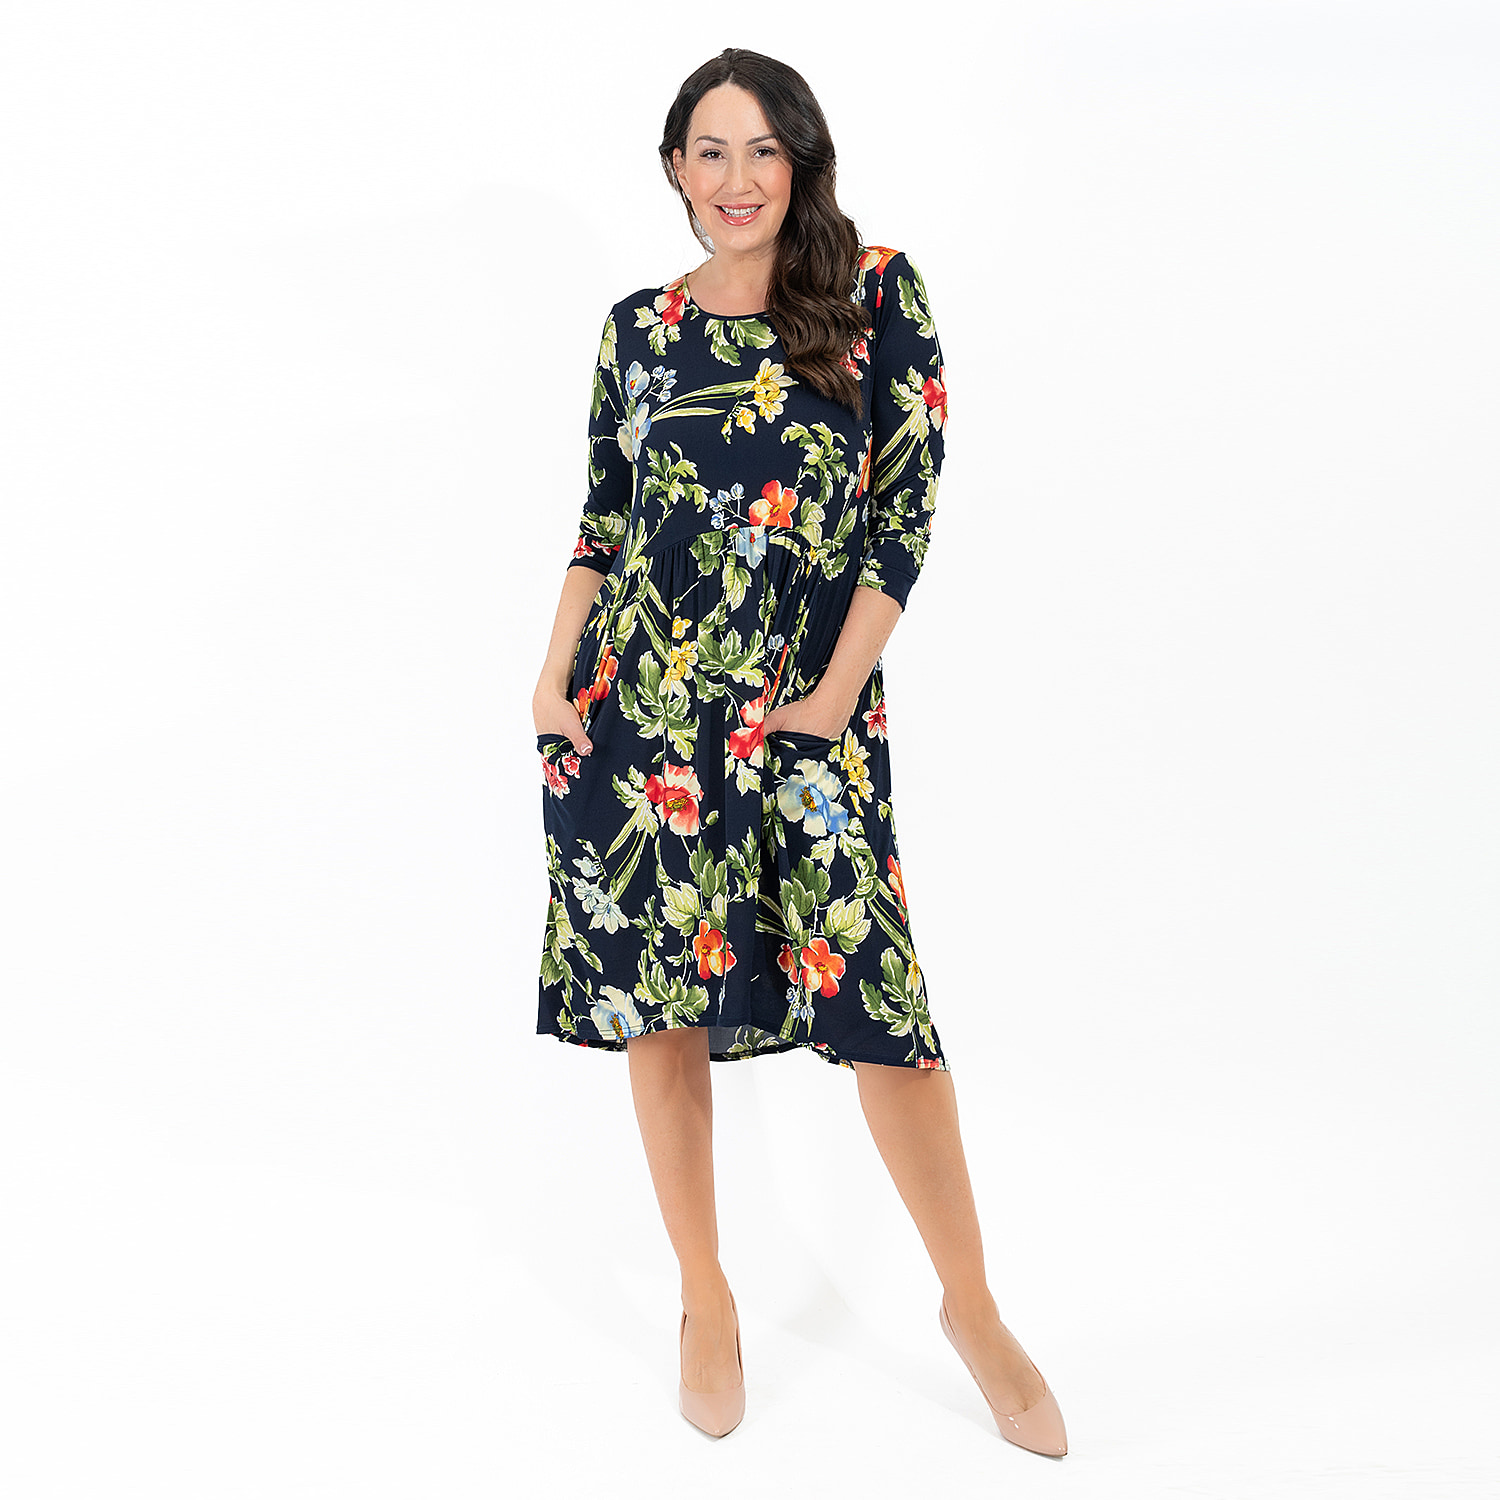 Polyester-Dress-Size-1x1-cm-Navy-Floral